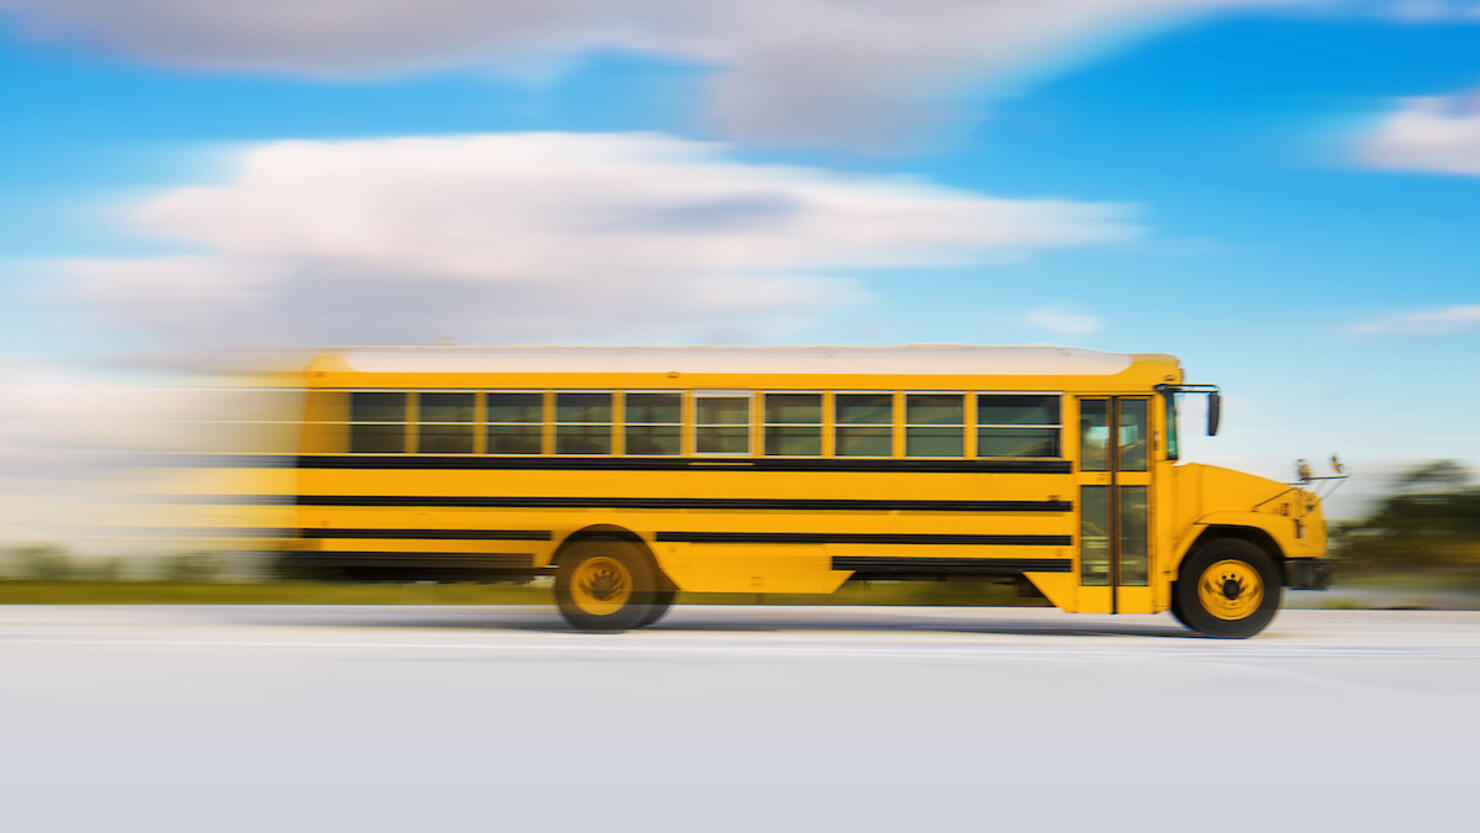 School Bus on the highway